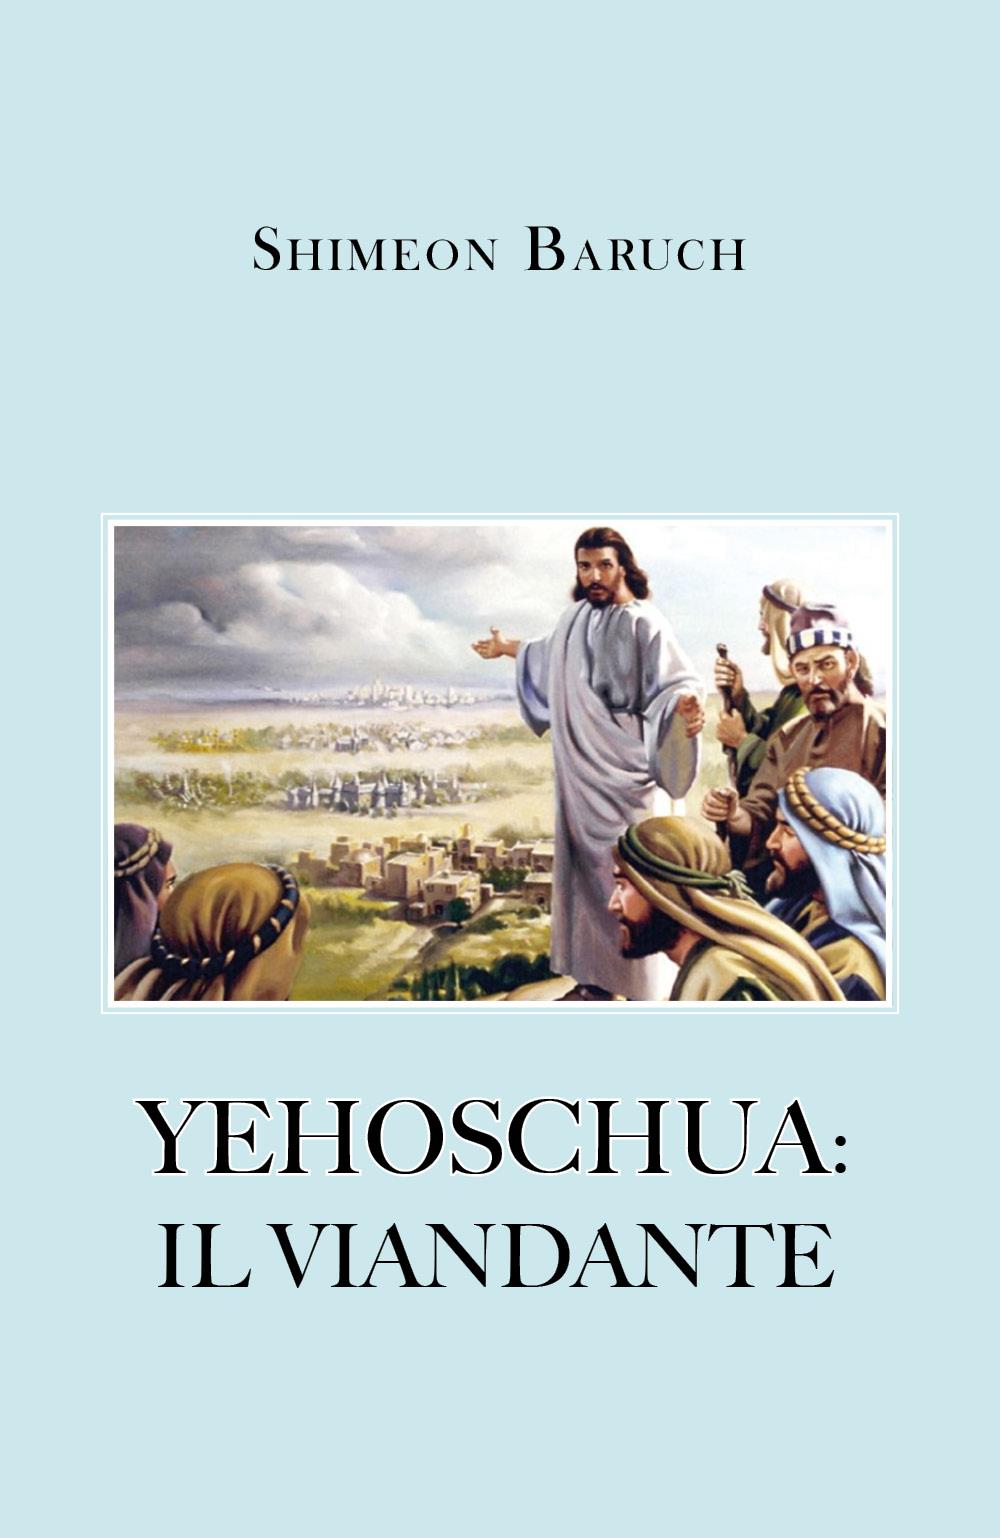 Yehoschua: Il Viandante